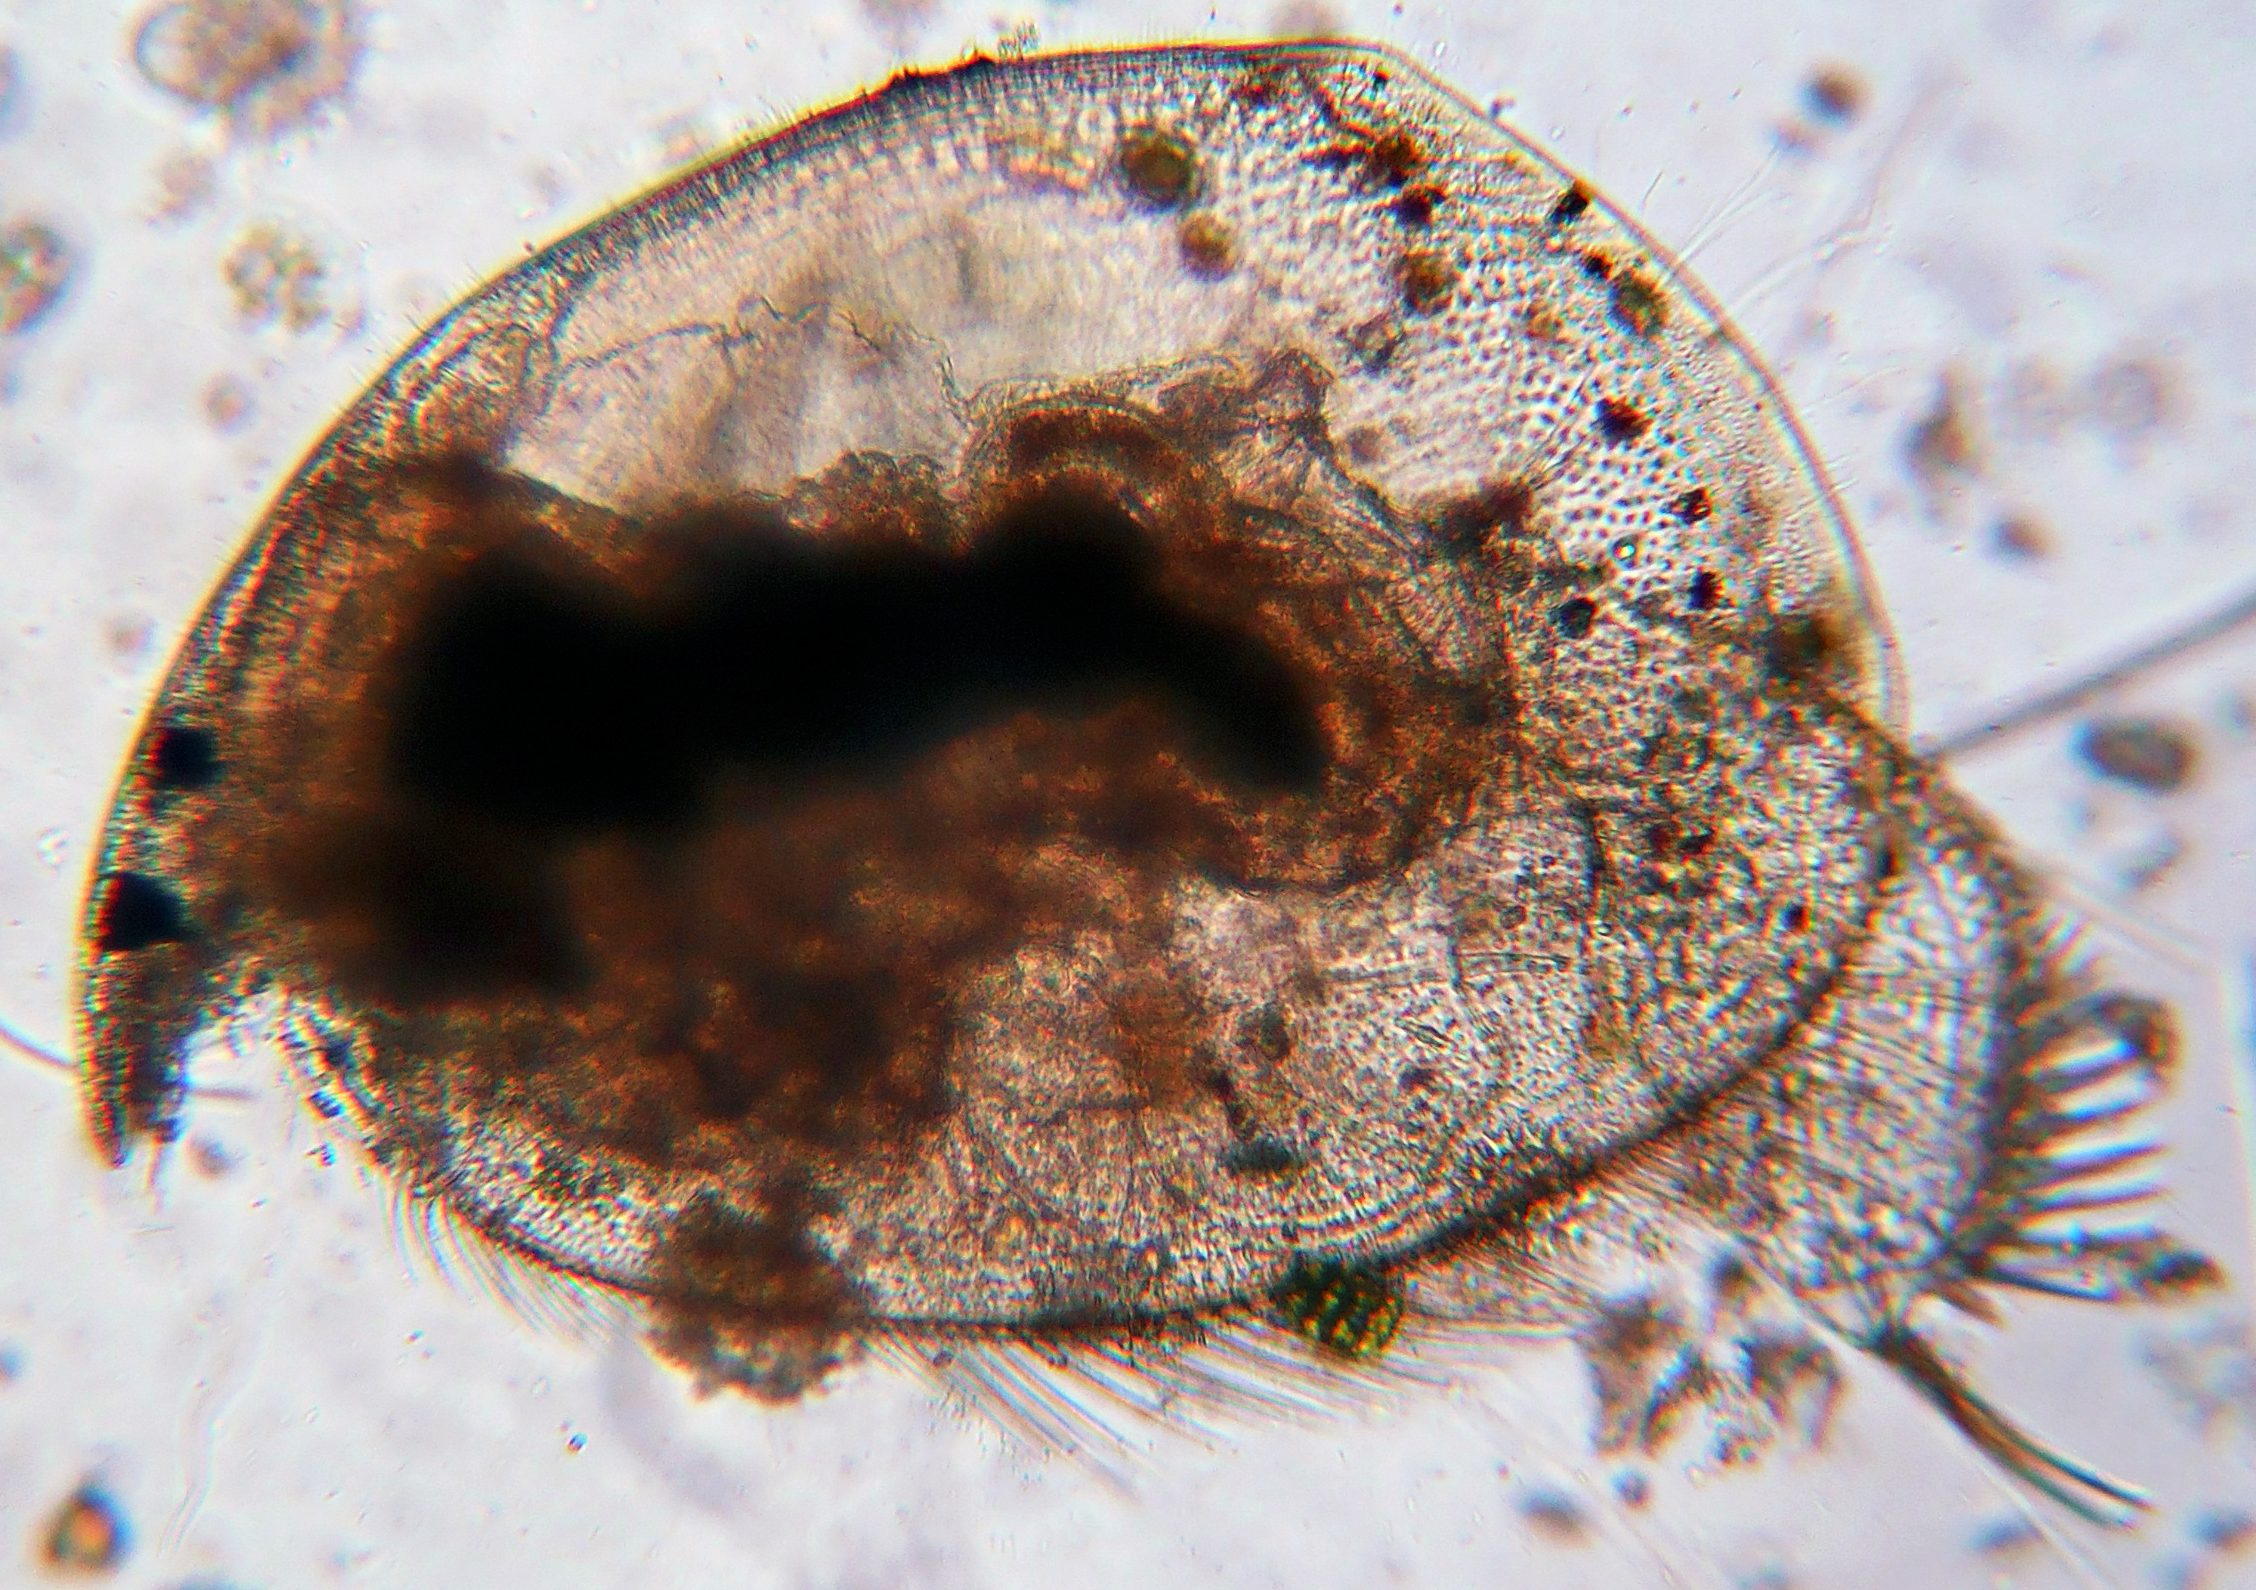 Leydigia ciliata - cladoceran zooplankton at Ram-Mula confluence (Image Source: Biologia Life Science LLP))